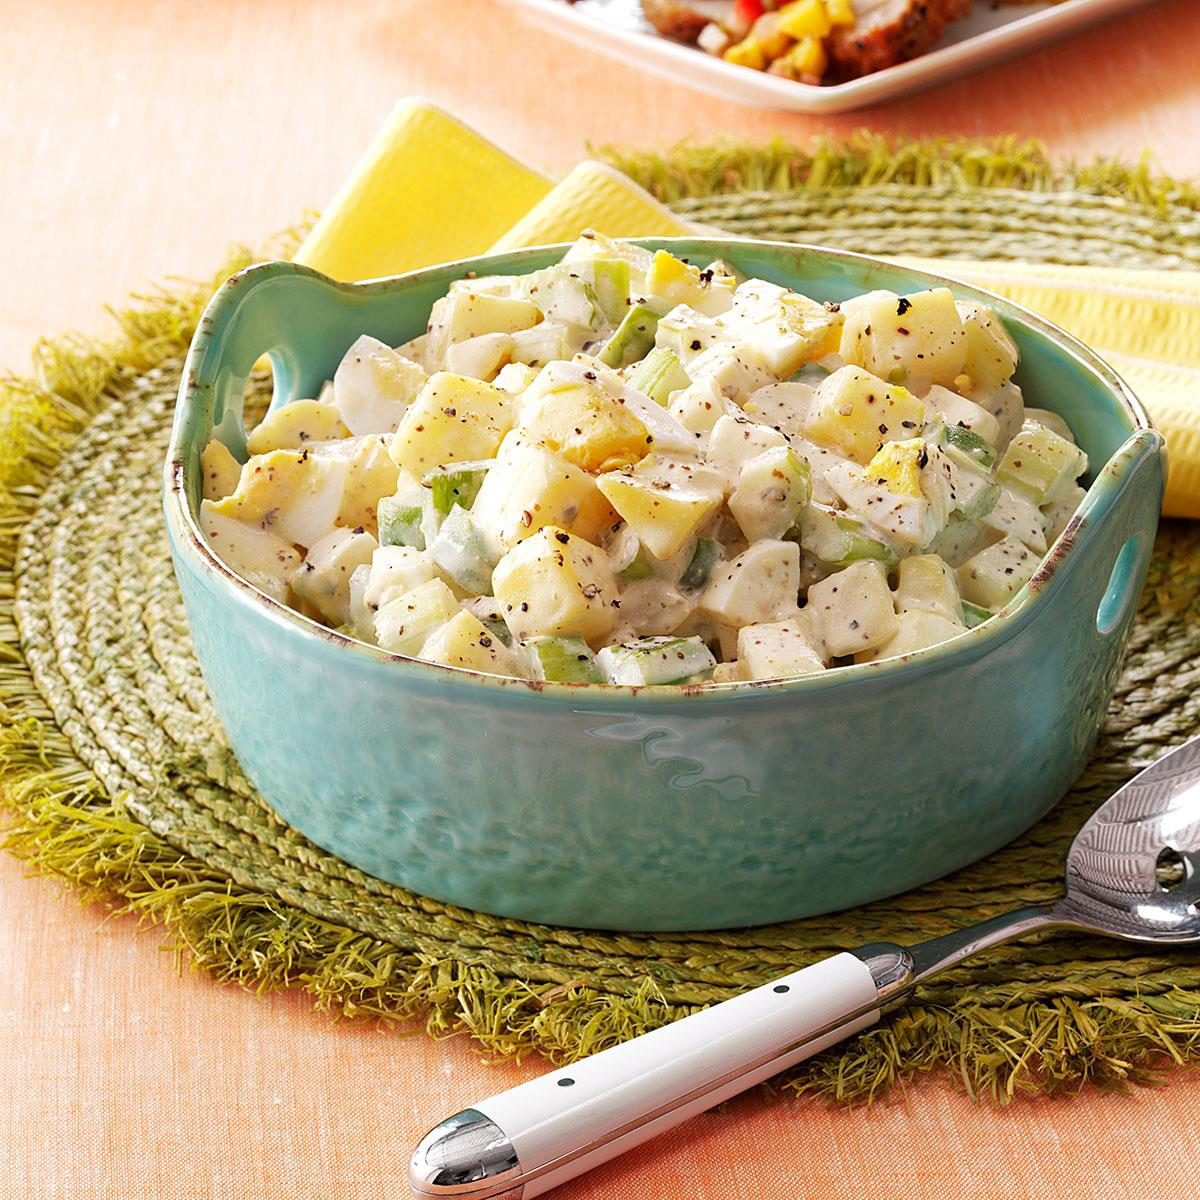 Warm Potato Salad Recipe How To Make It